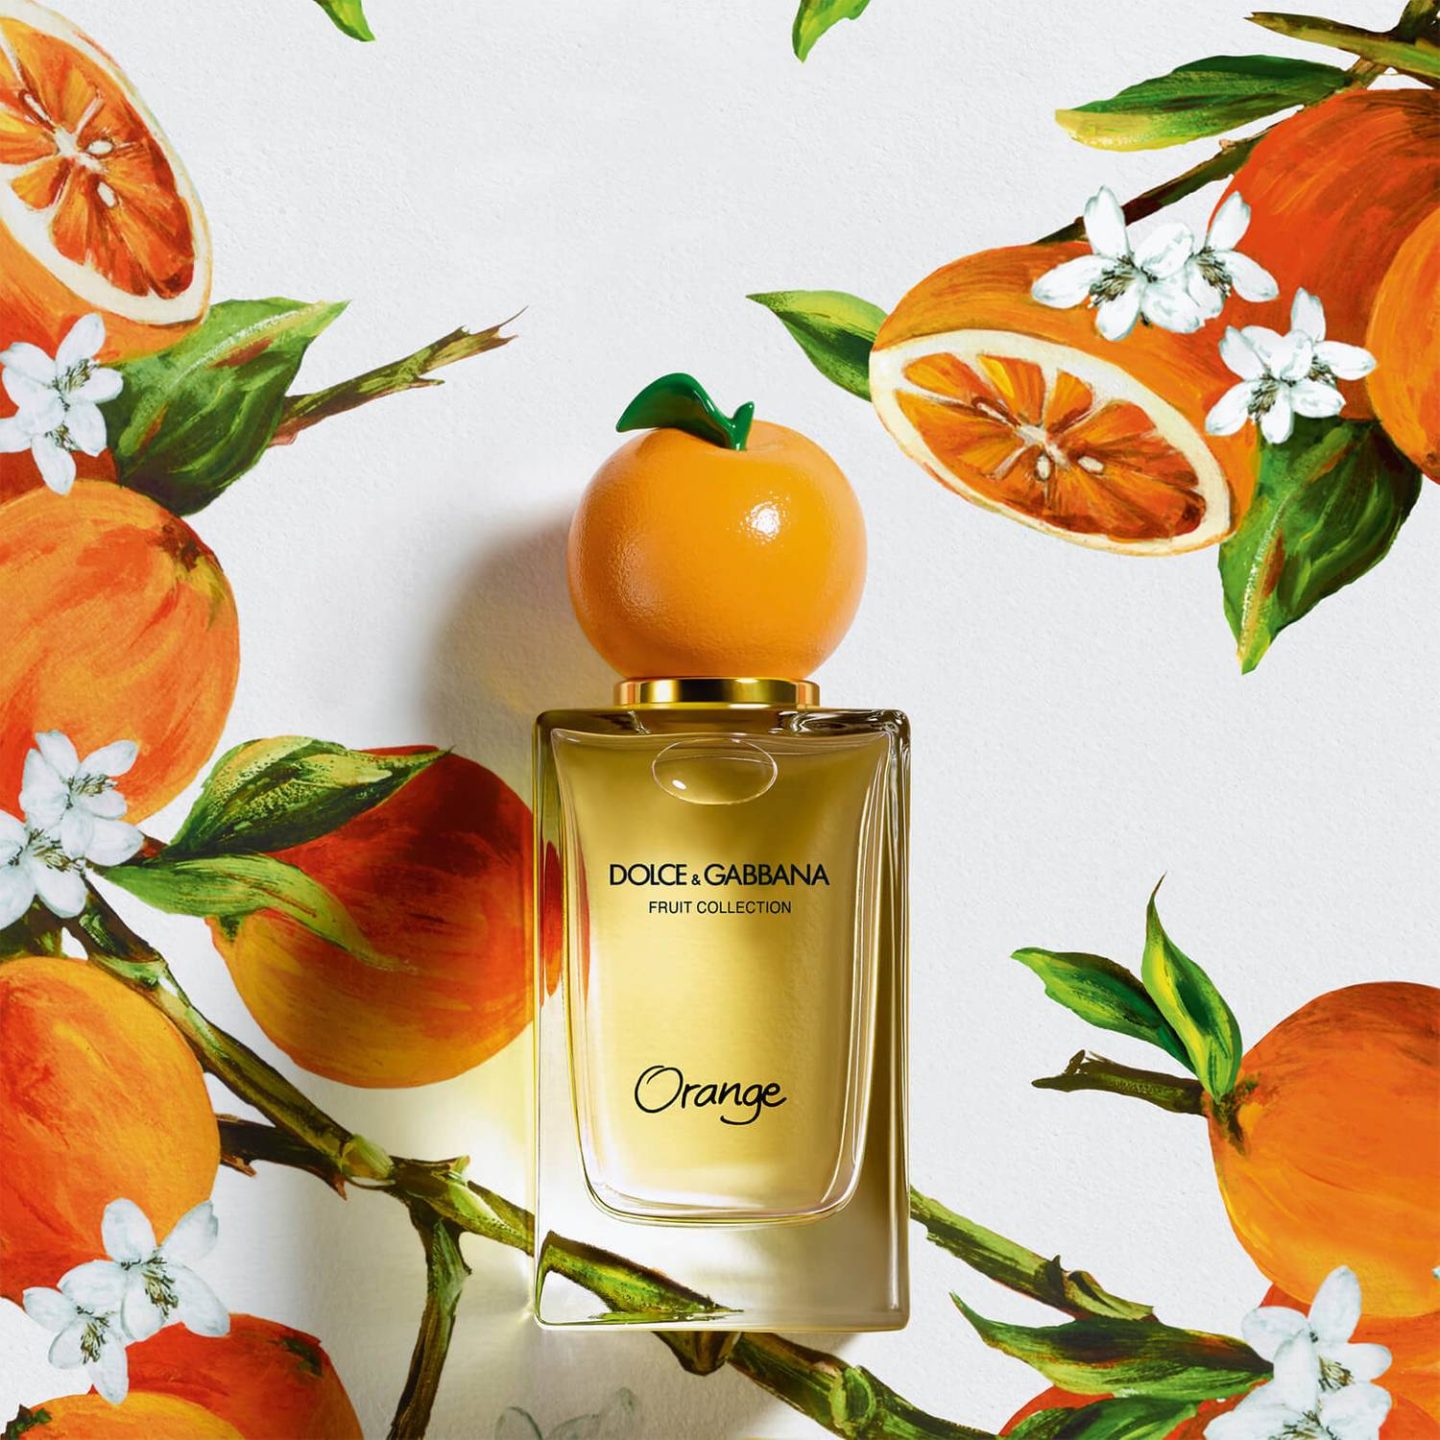 Dolce-Gabbana-Fruit-Collection-Orange น้ำหอม